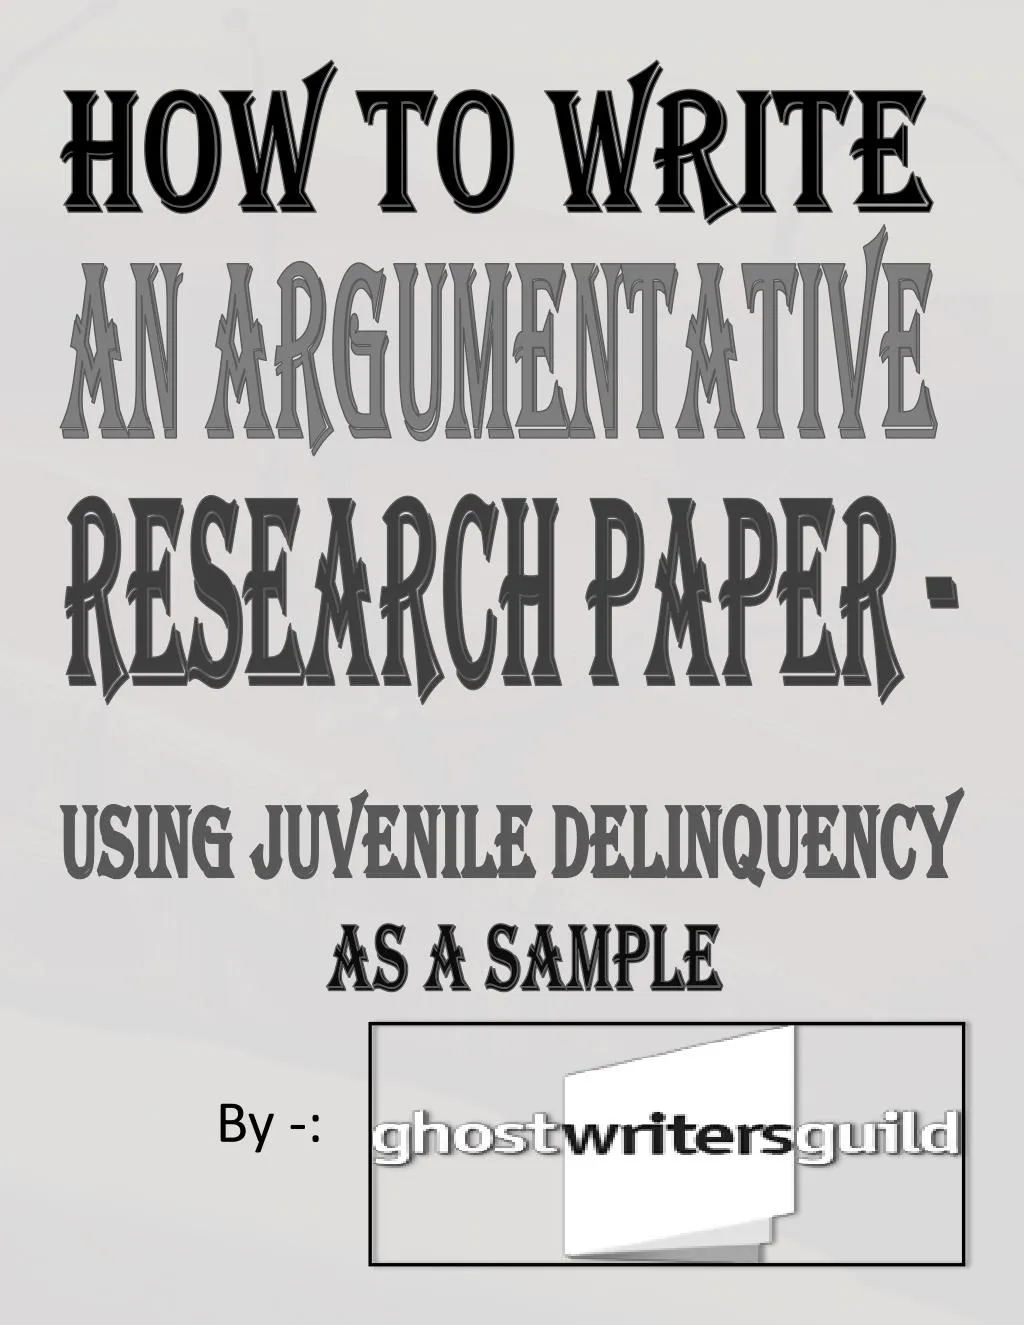 argumentative research paper ppt